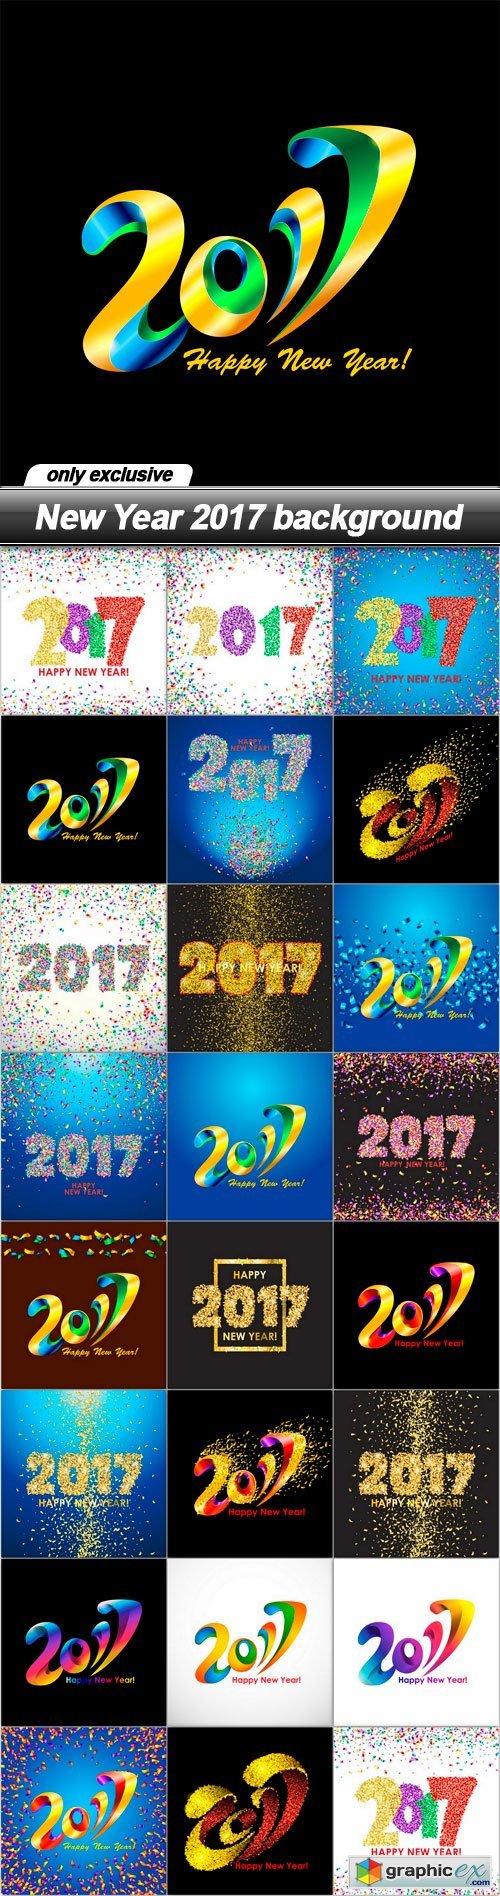 New Year 2017 background - 23 EPS